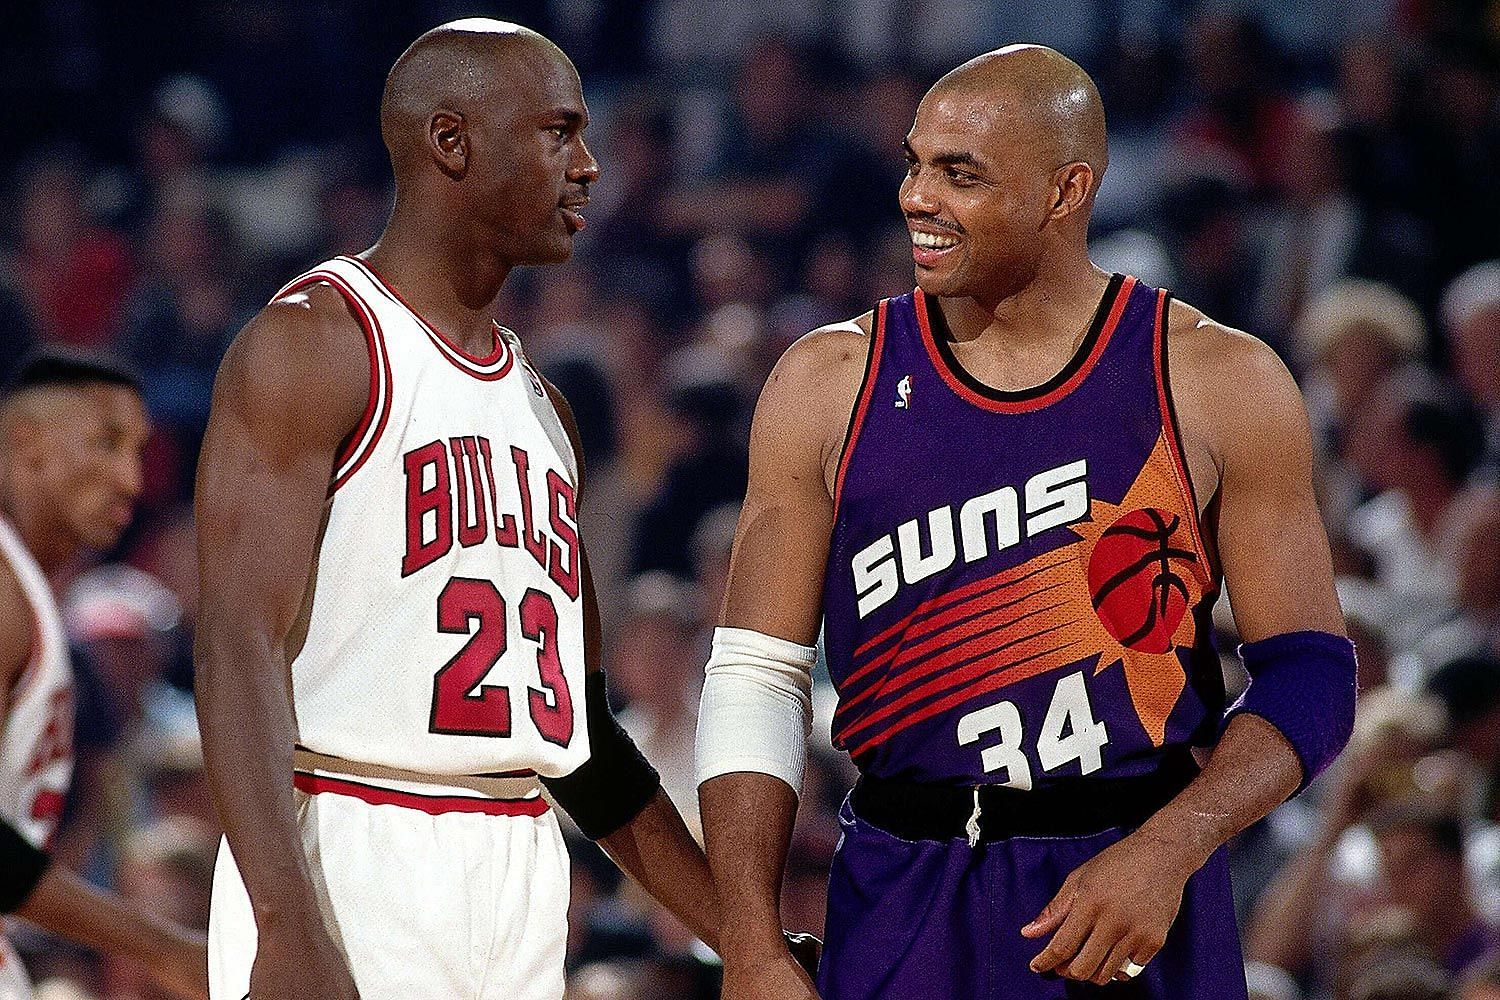 NBA legends Michael Jordan, left, and Charles Barkley